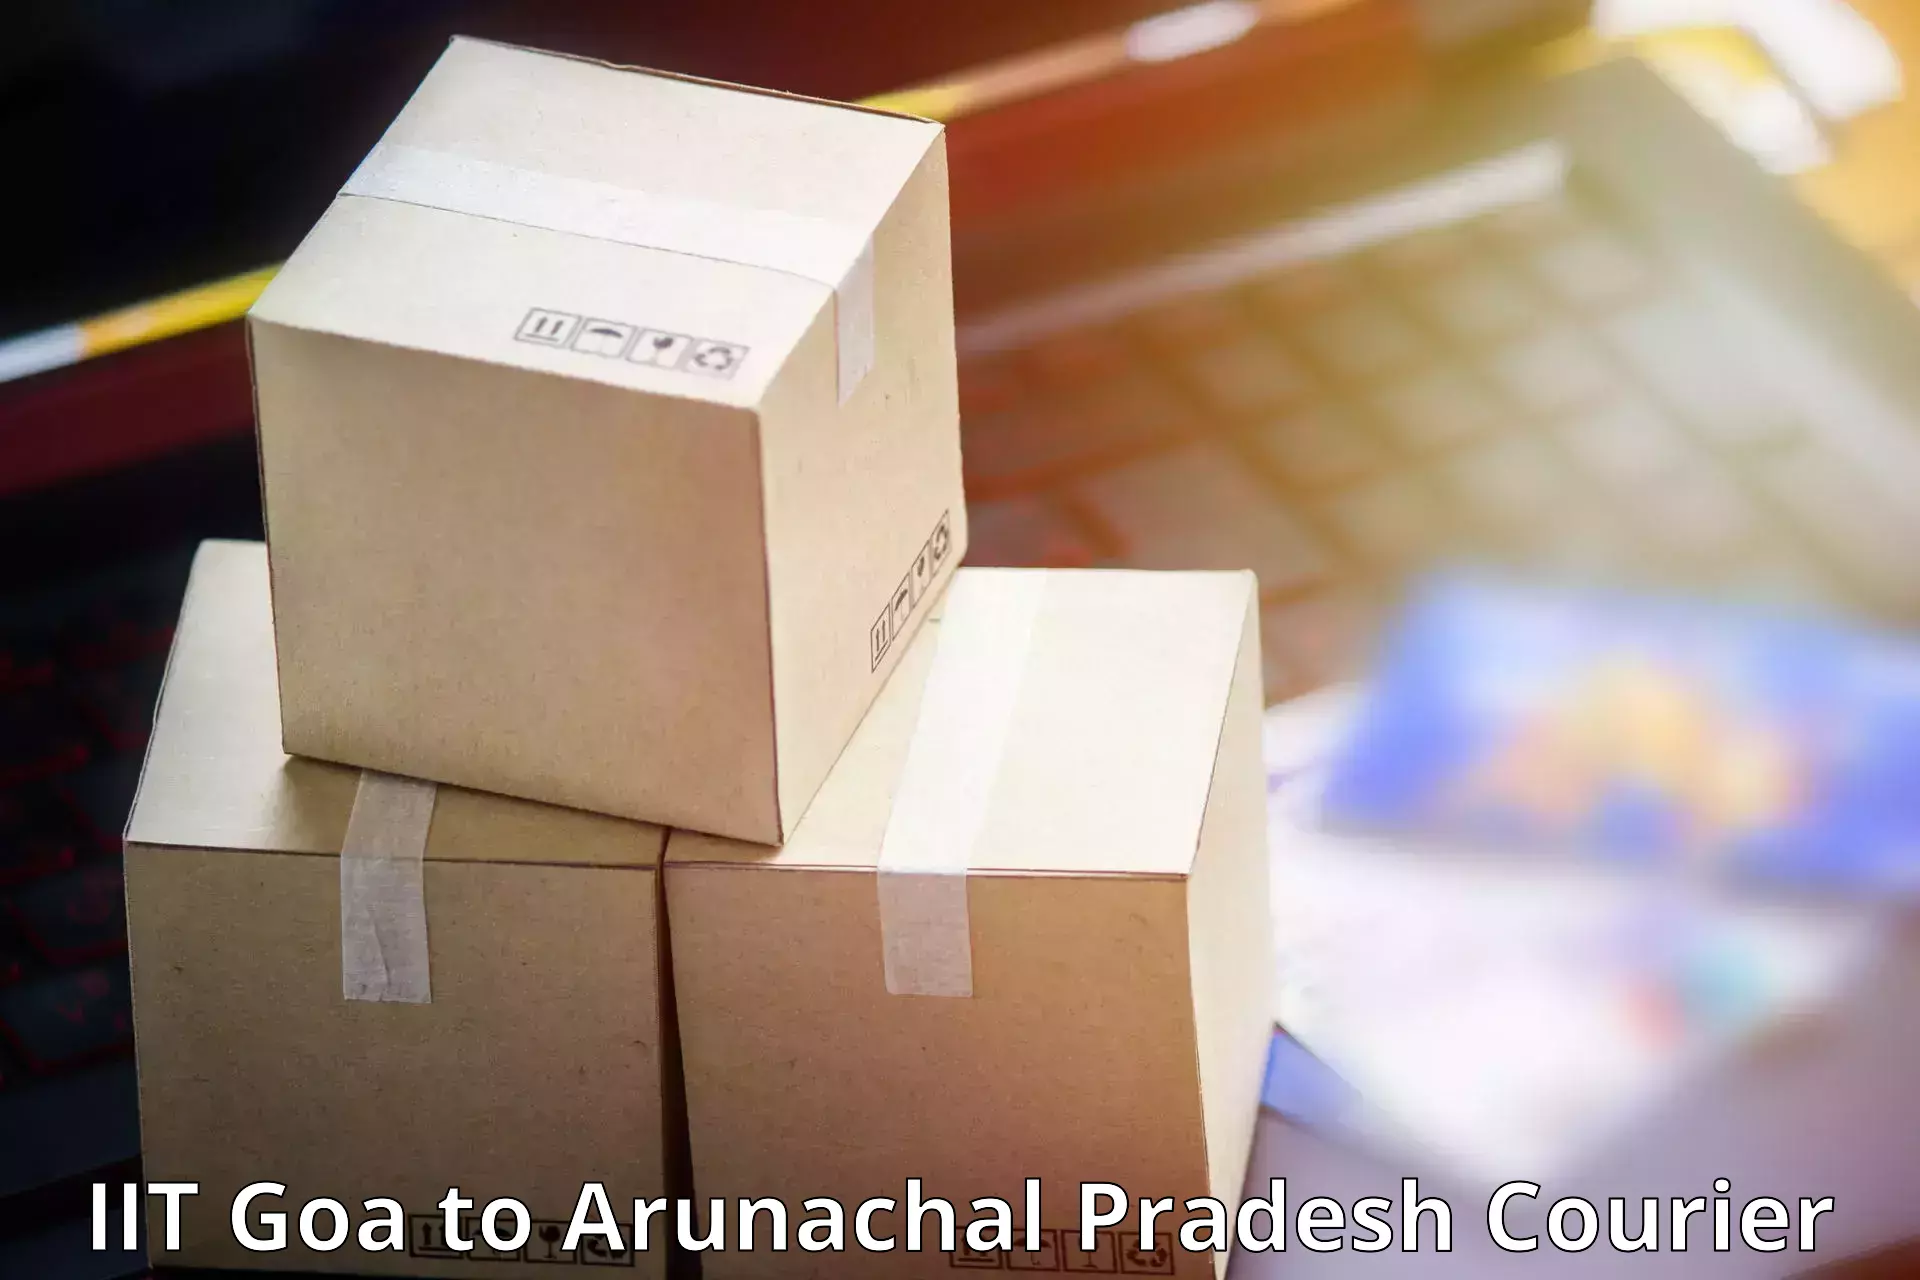 Global shipping networks IIT Goa to Arunachal Pradesh